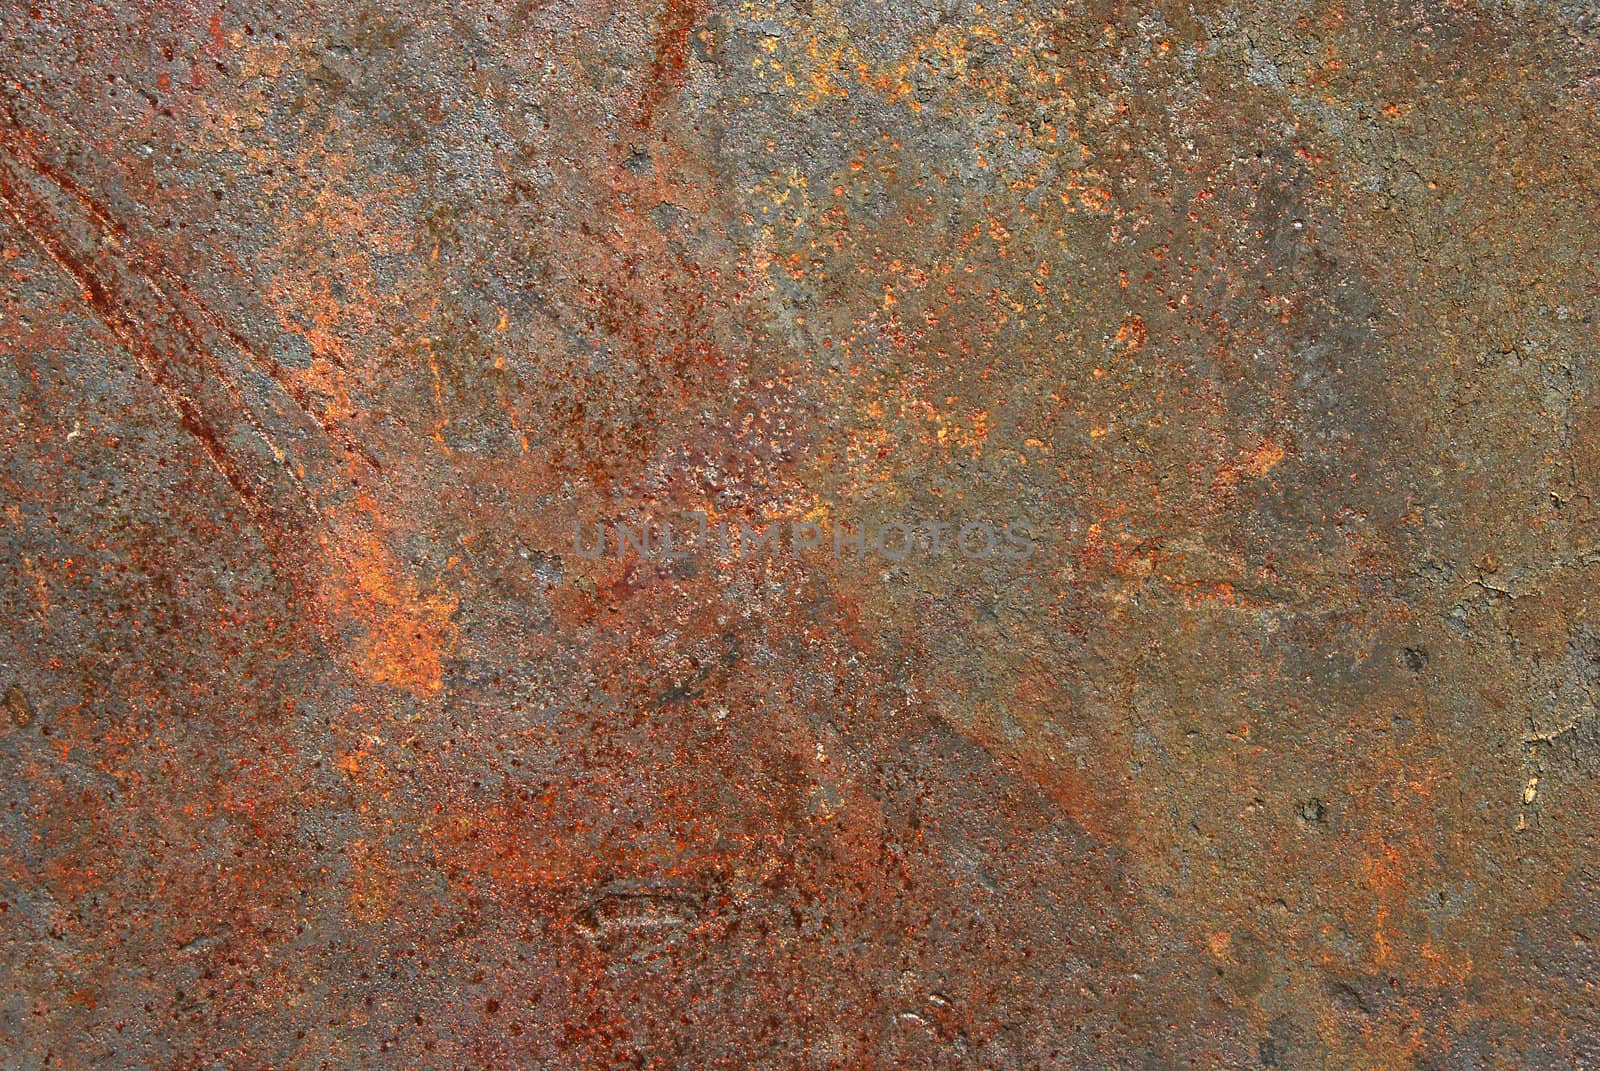 Rusty iron sheet surface by varbenov